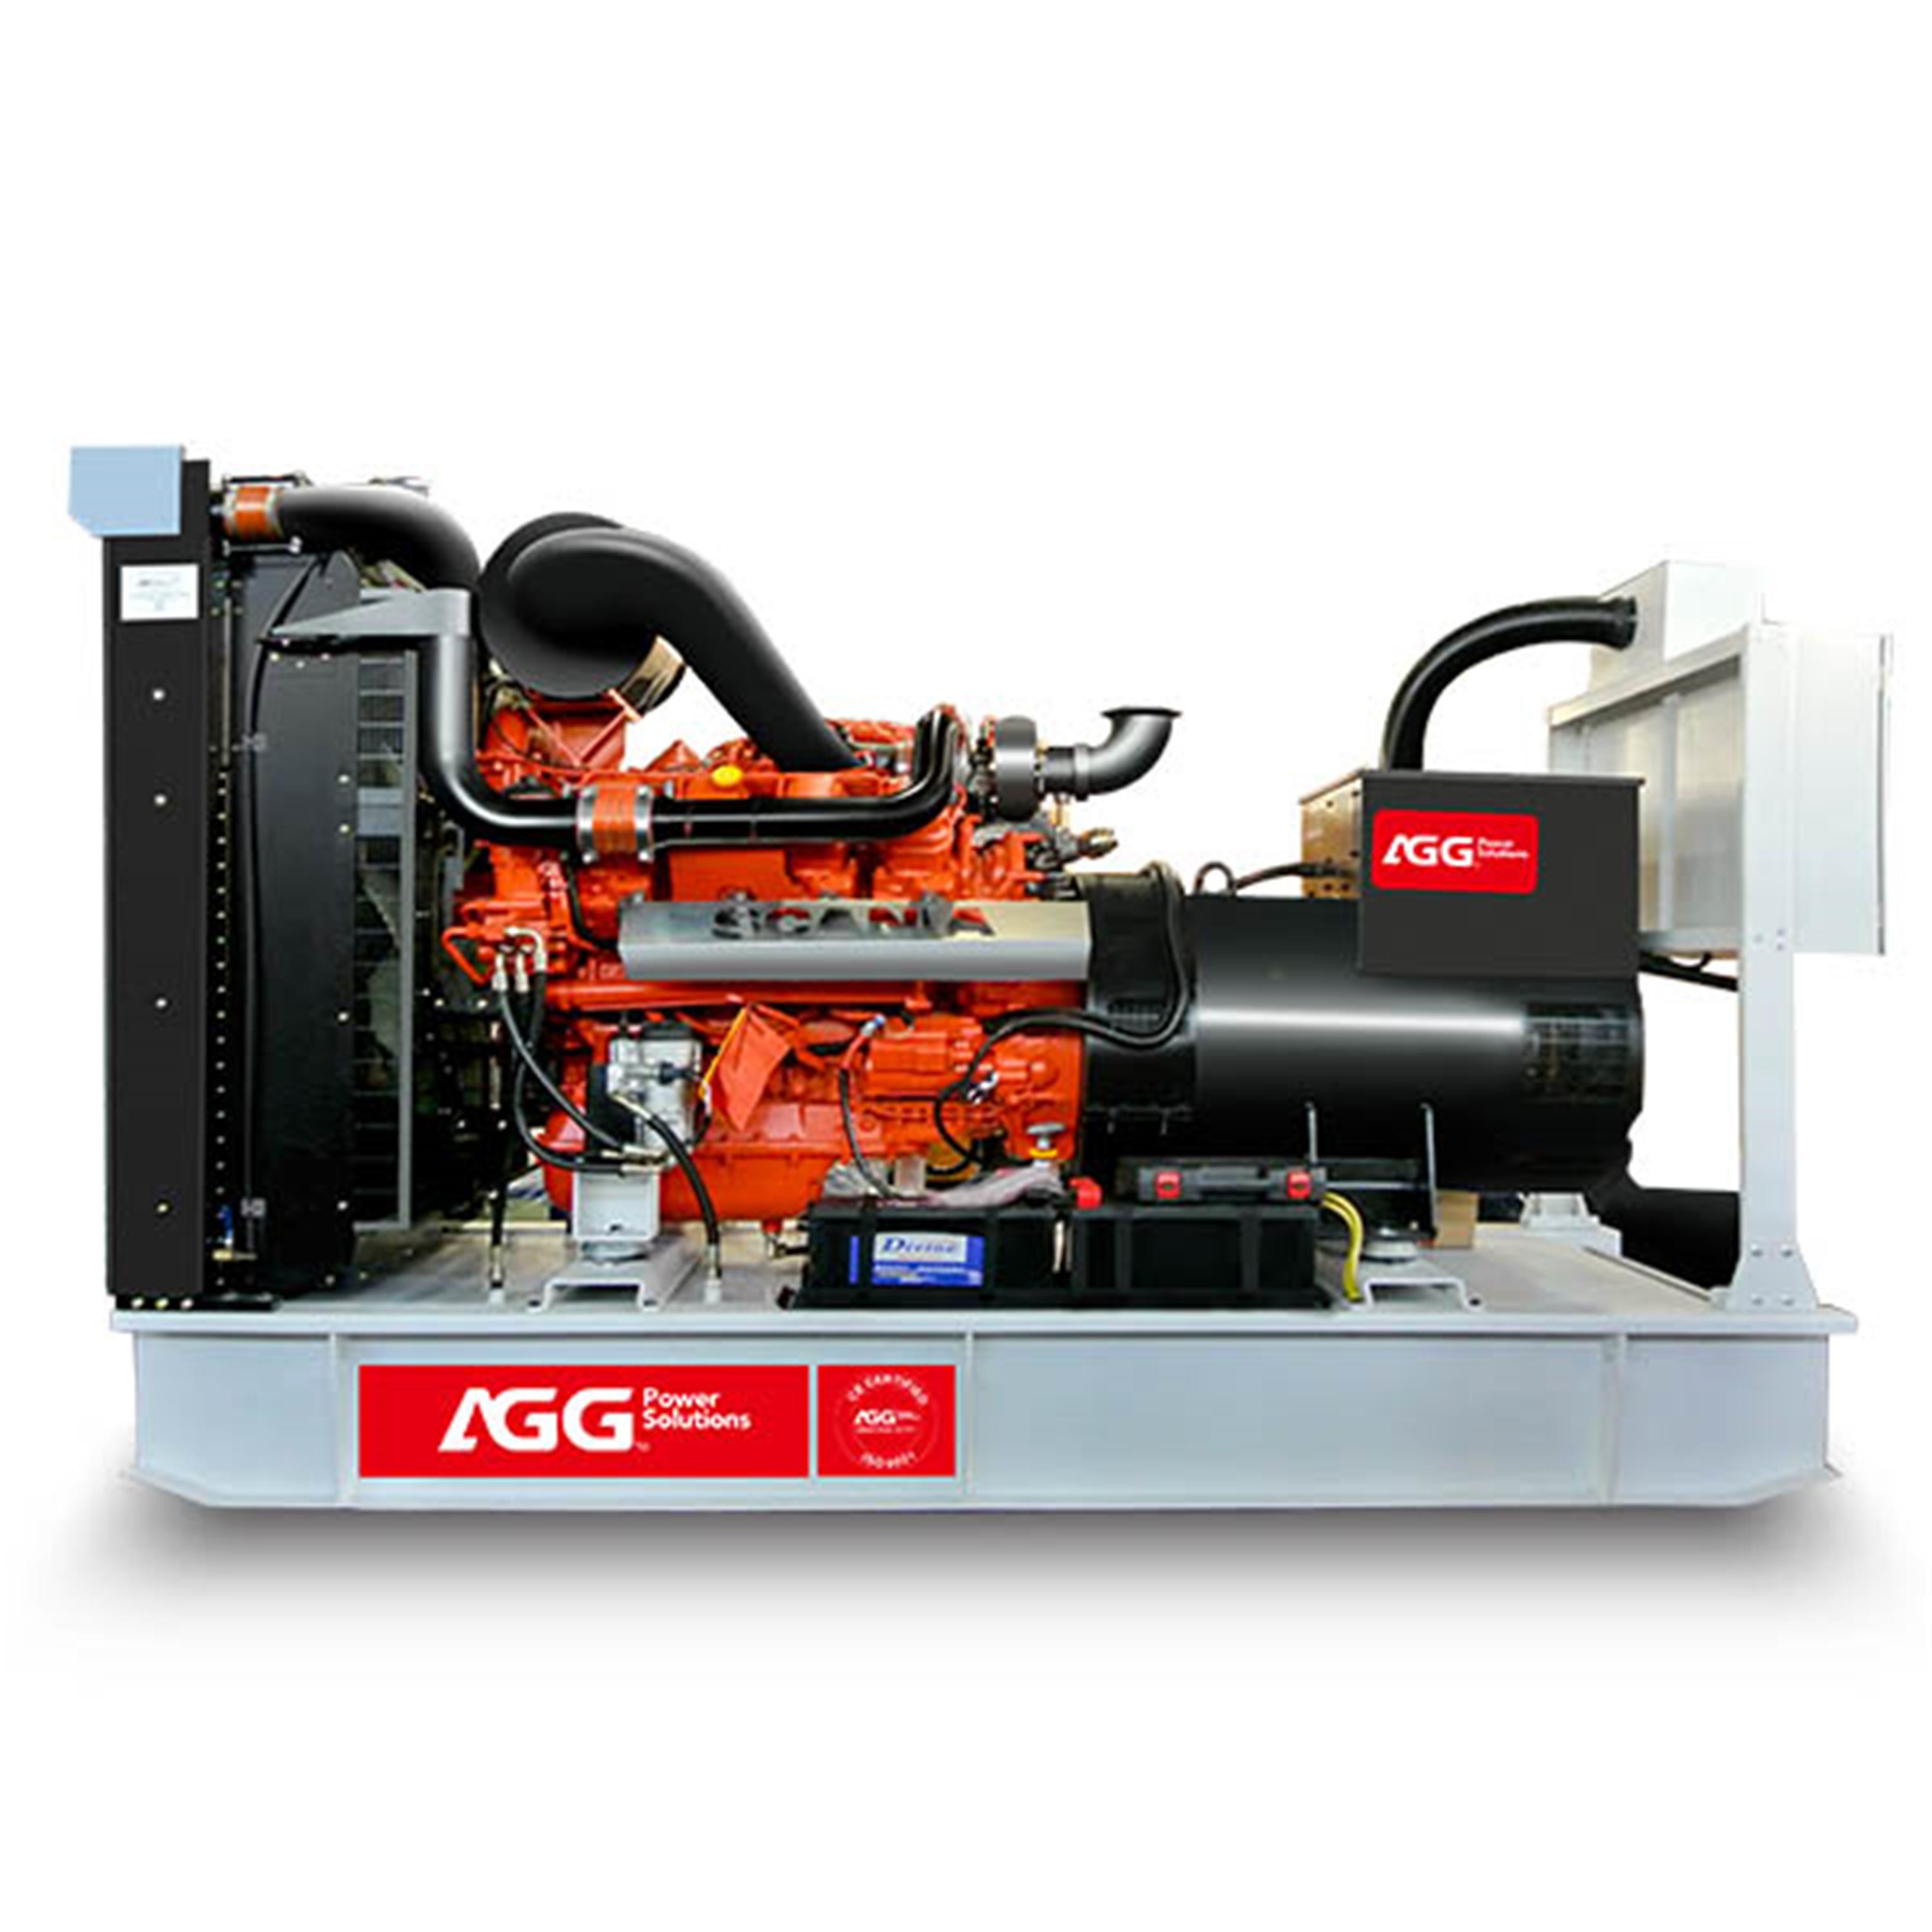 S450E5-50HZ - AGG Power Technology (UK) CO., LTD.